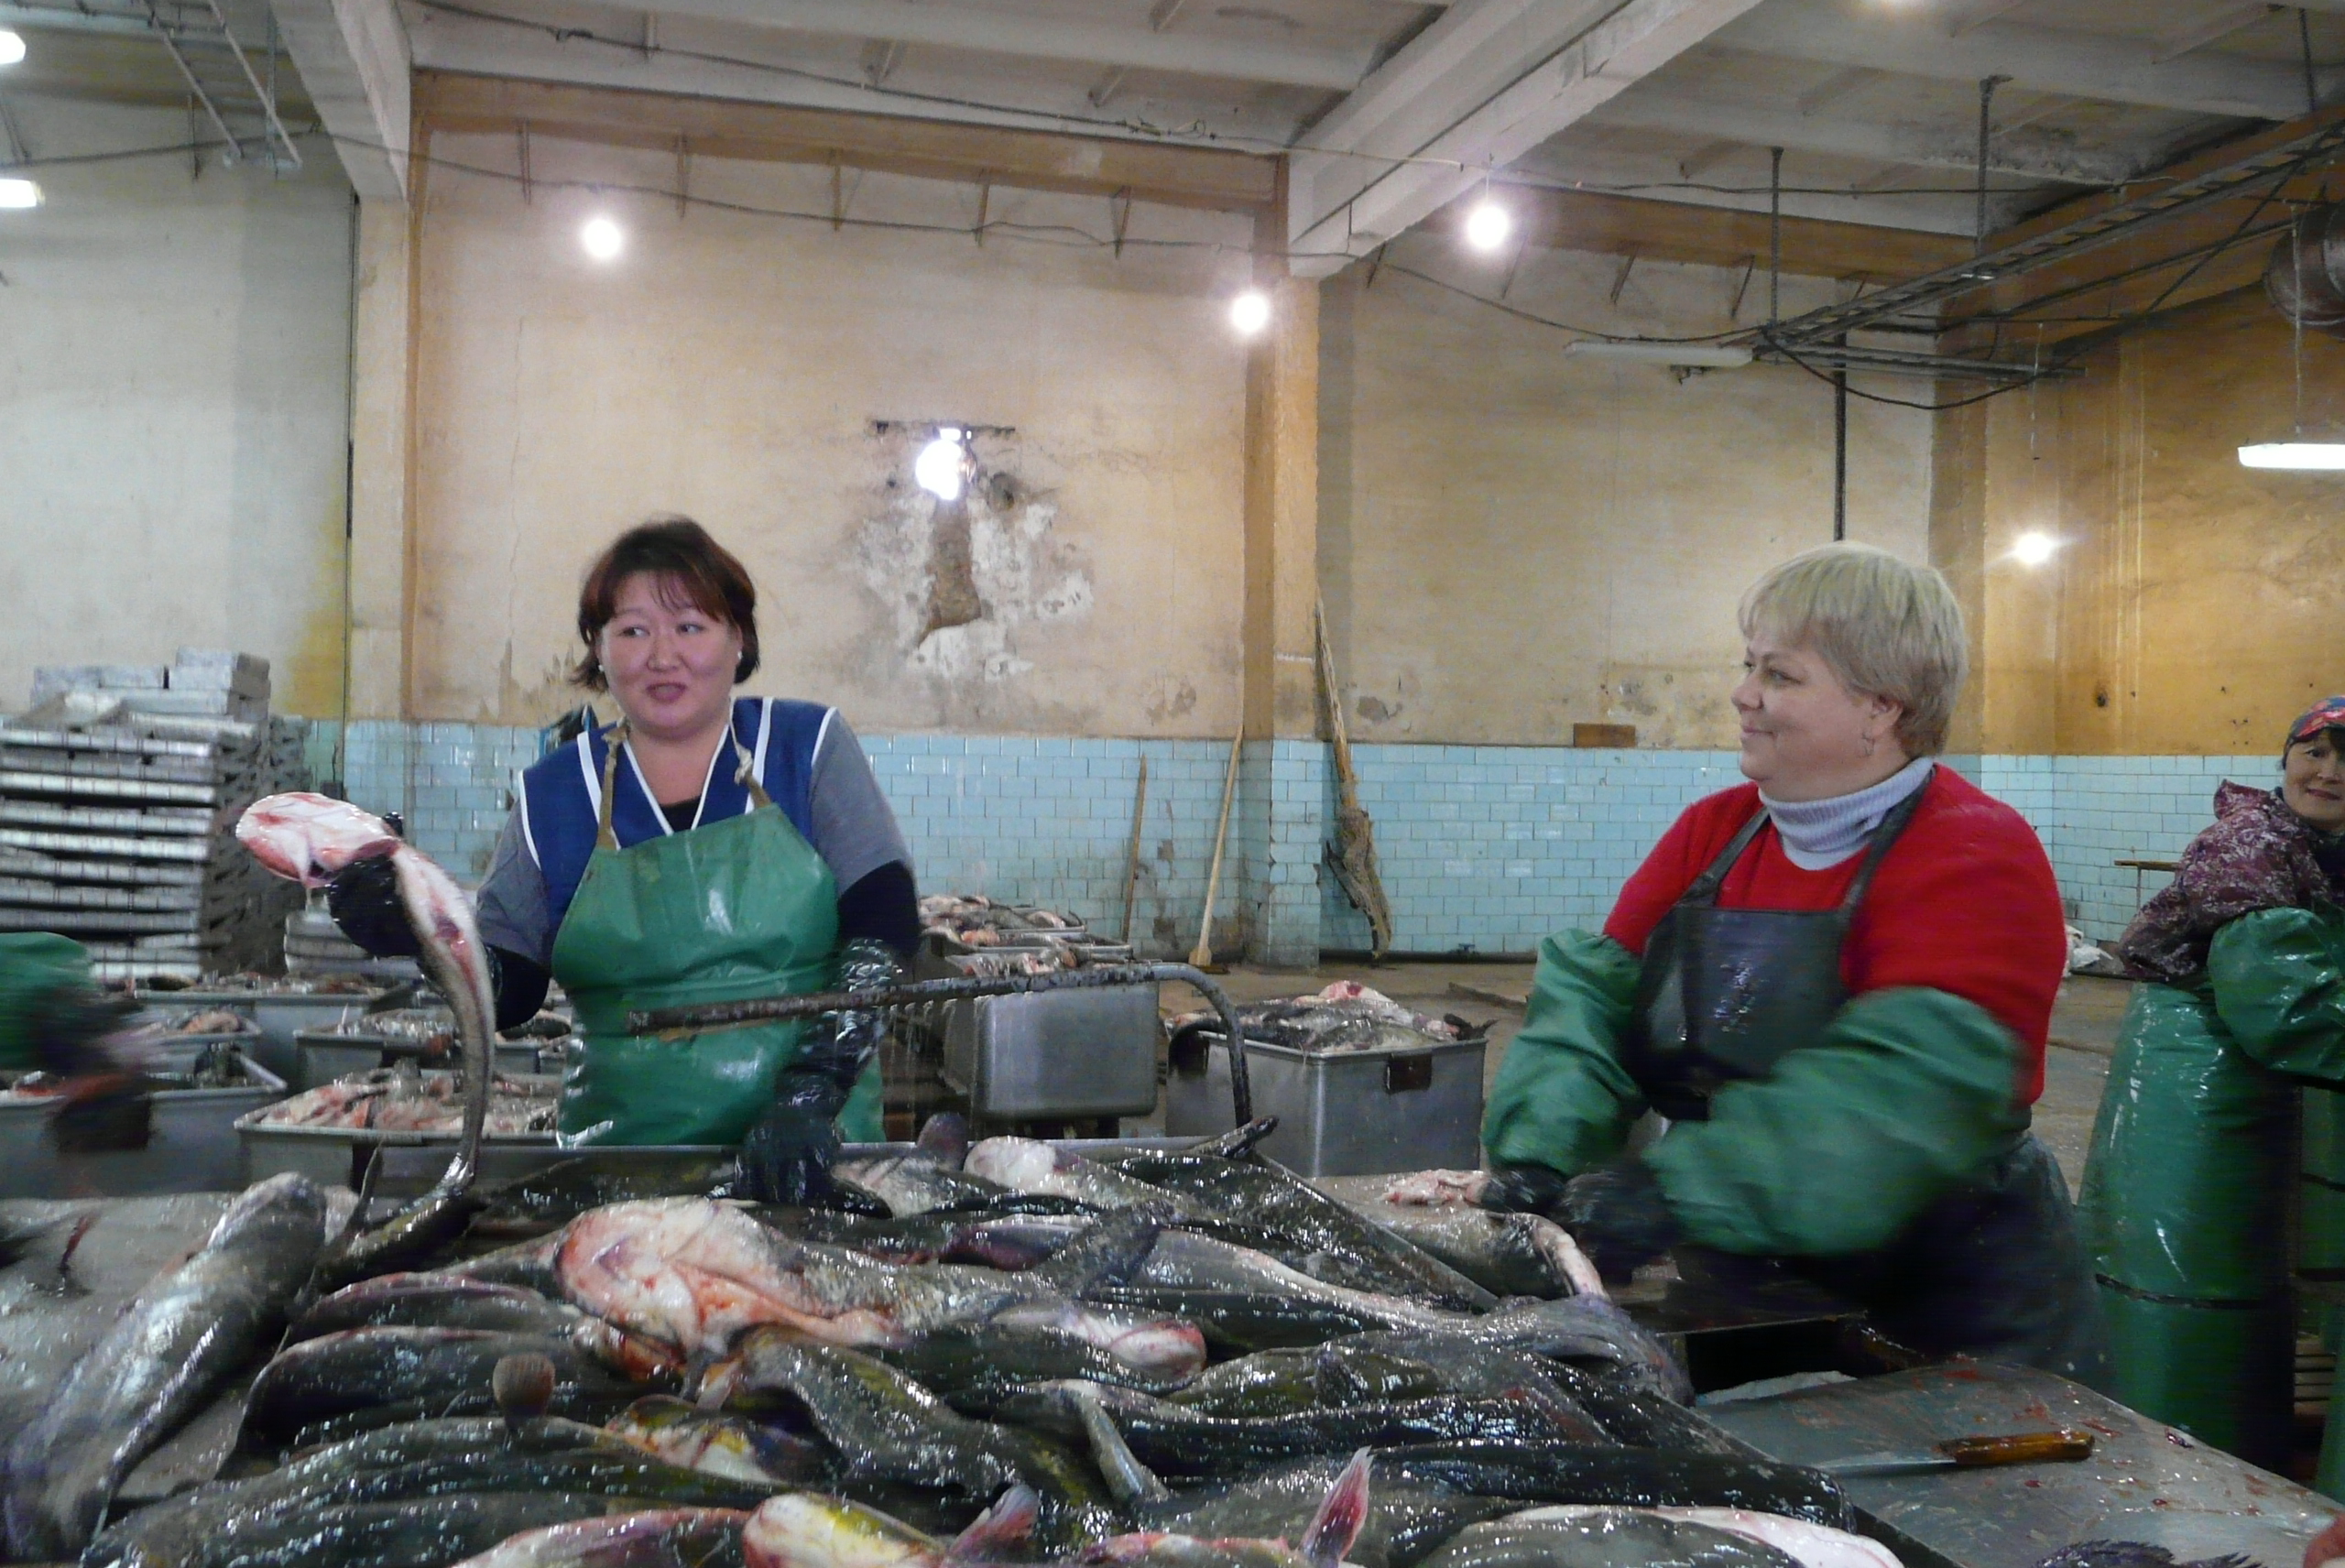 Новые вакансии астрахани. Рыбный завод Астрахань. Астраханский рыбный промысел, Астрахань. Рыбная промышленность Астрахань. Переработка рыбы.